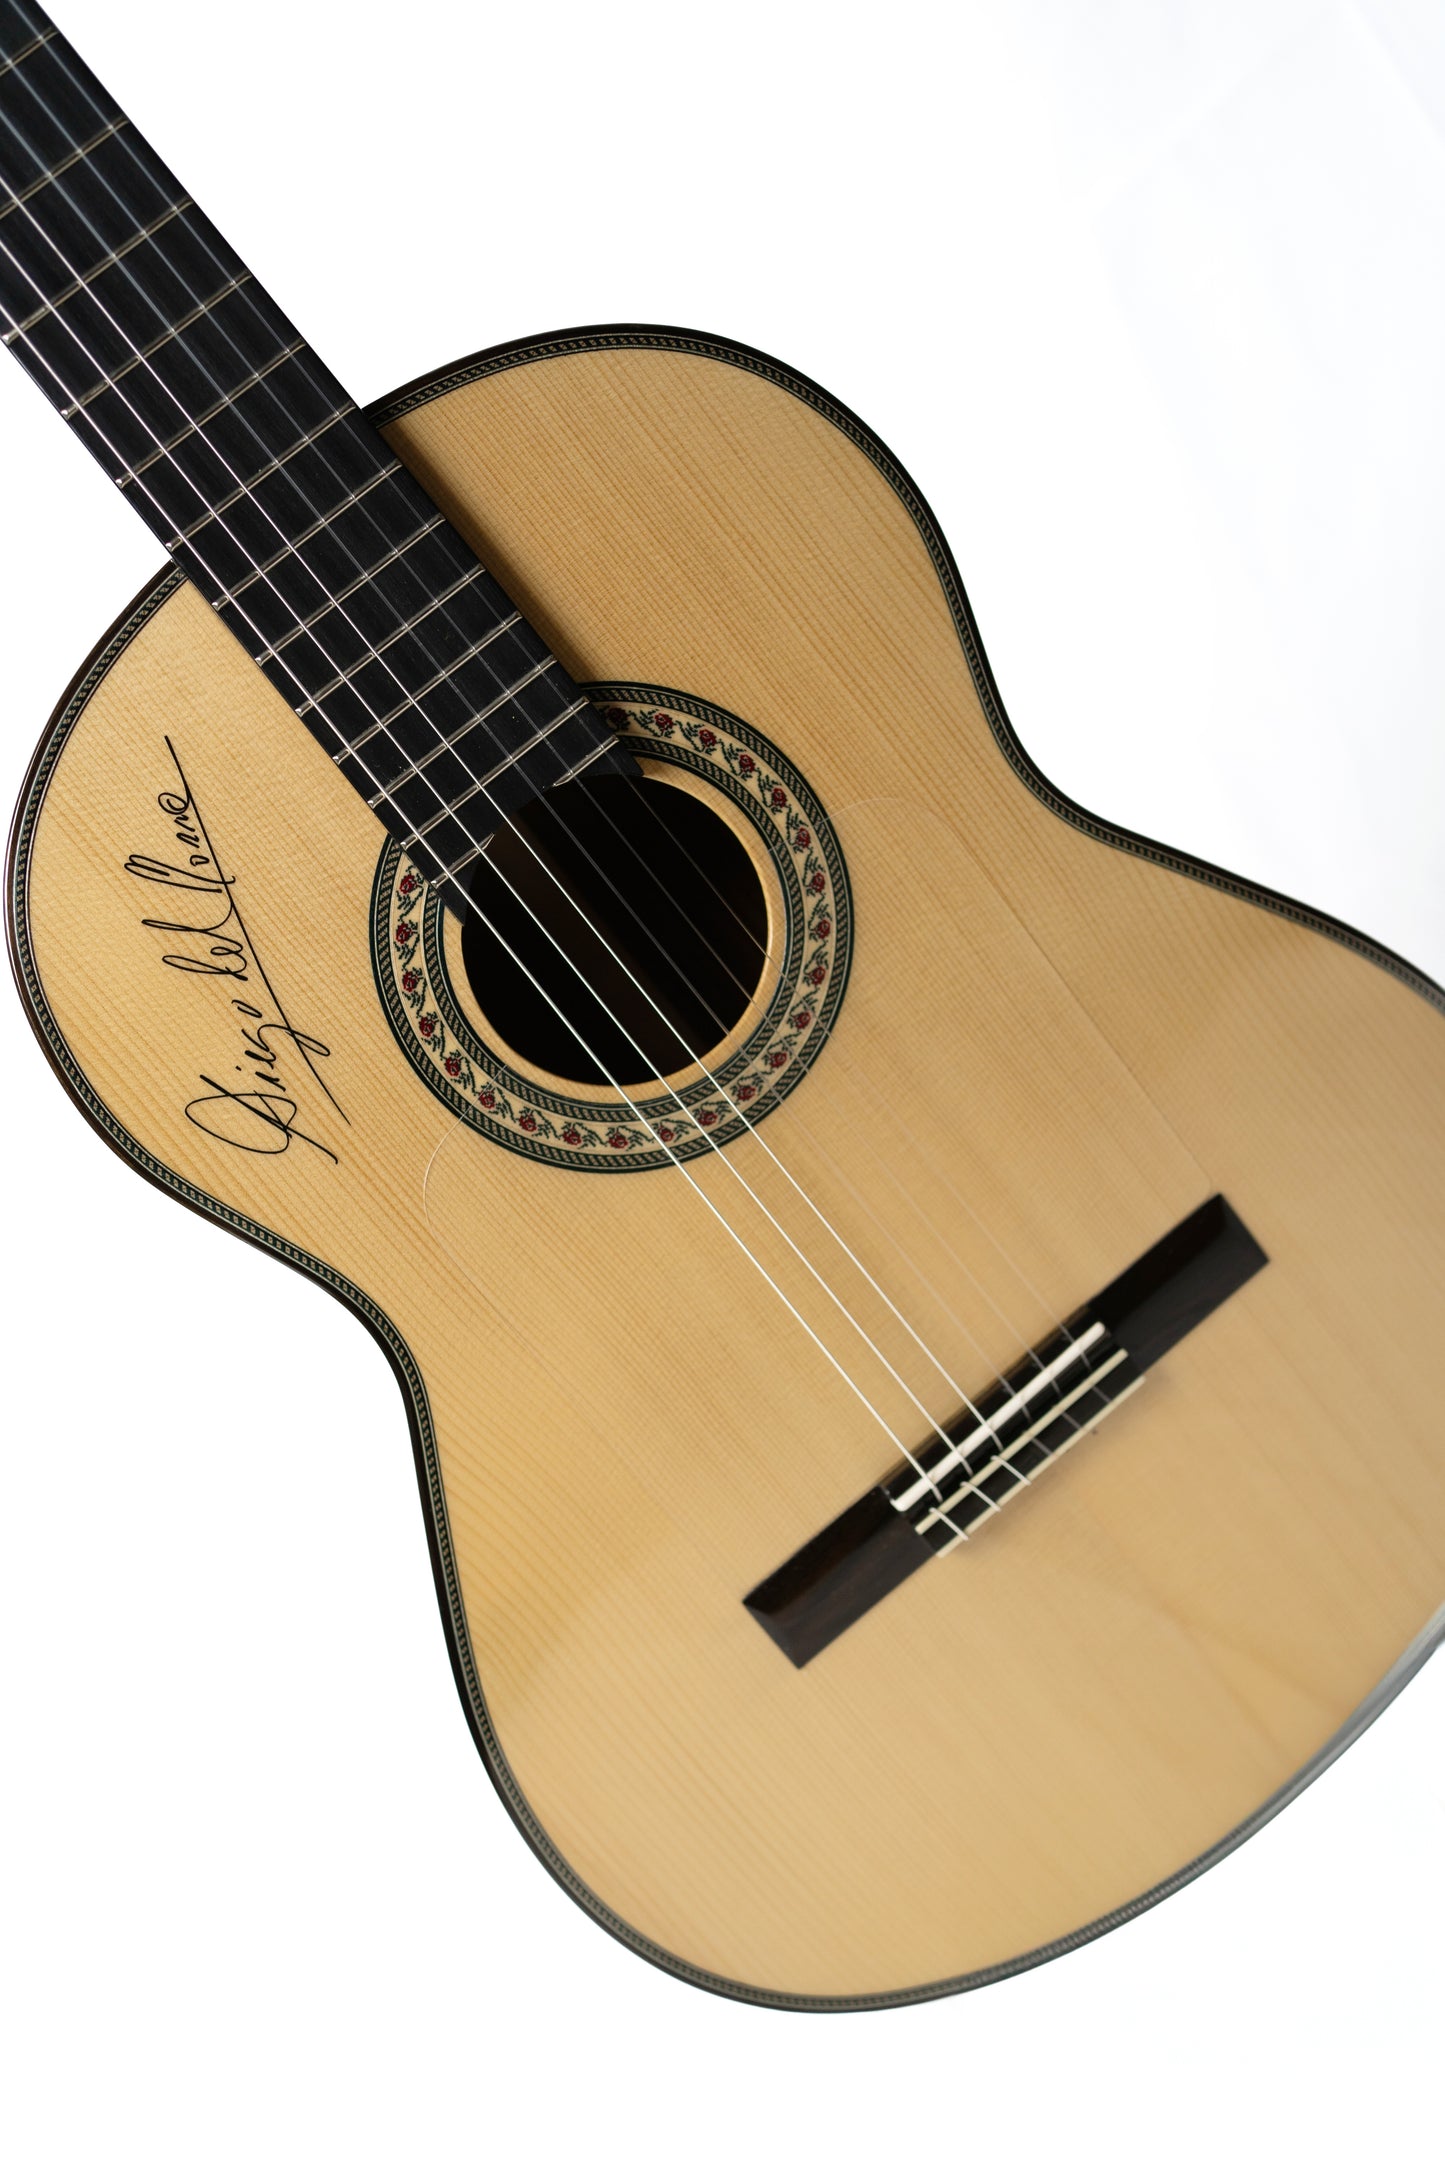 Guitarra Flamenca Modesto Malla "Diego del Morao"  Autoamplificada Double OS1 firmada en la tapa